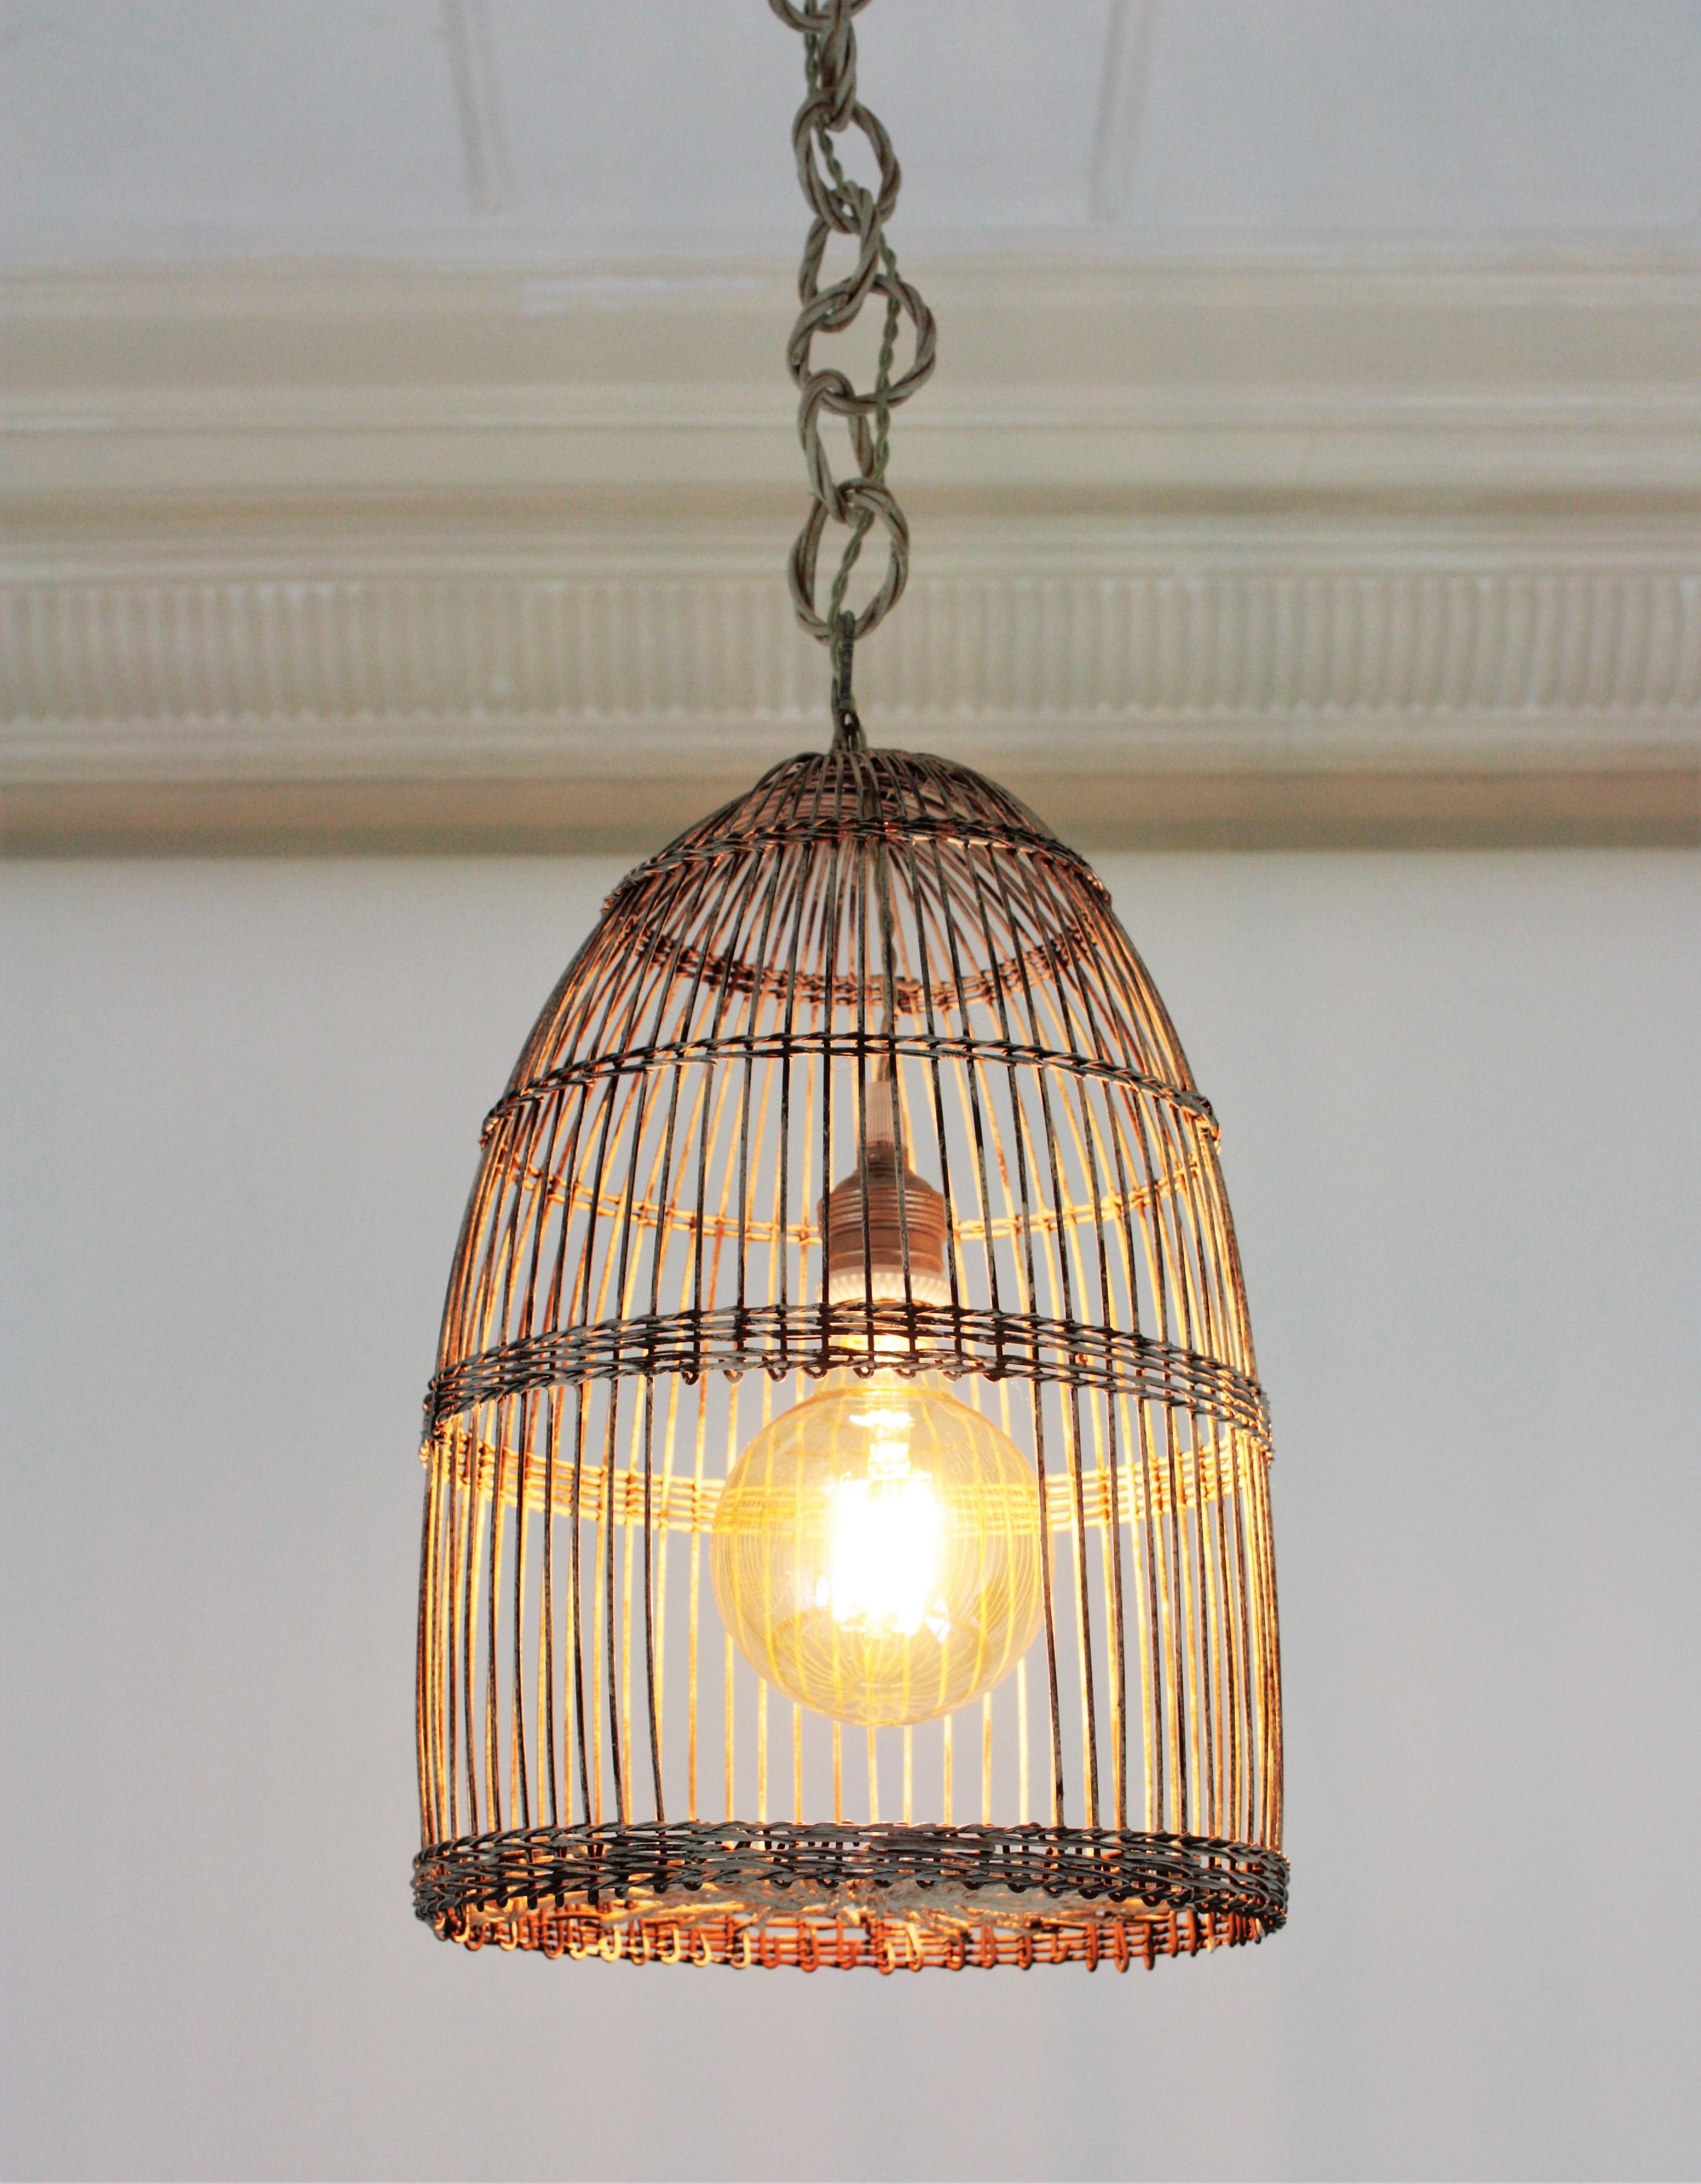 Spanish Birdcage Rustic Hanging Light Pendant Lamp